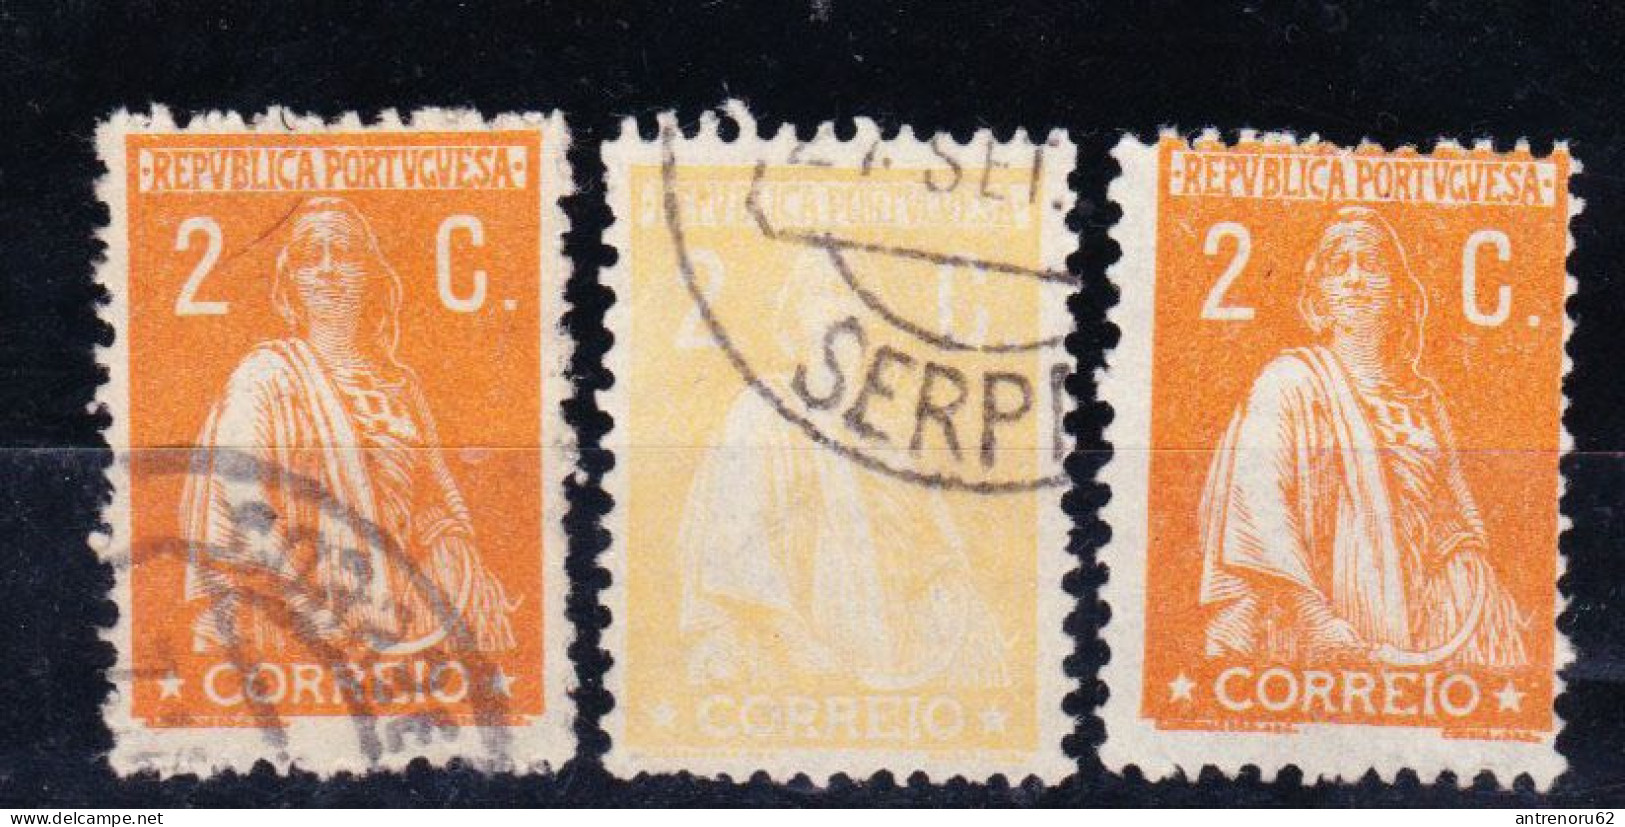 STAMPS-1917-PORTUGAL-ERROR-USED(NORMAL IS ORANGE)-SEE-SCAN - Nuevos